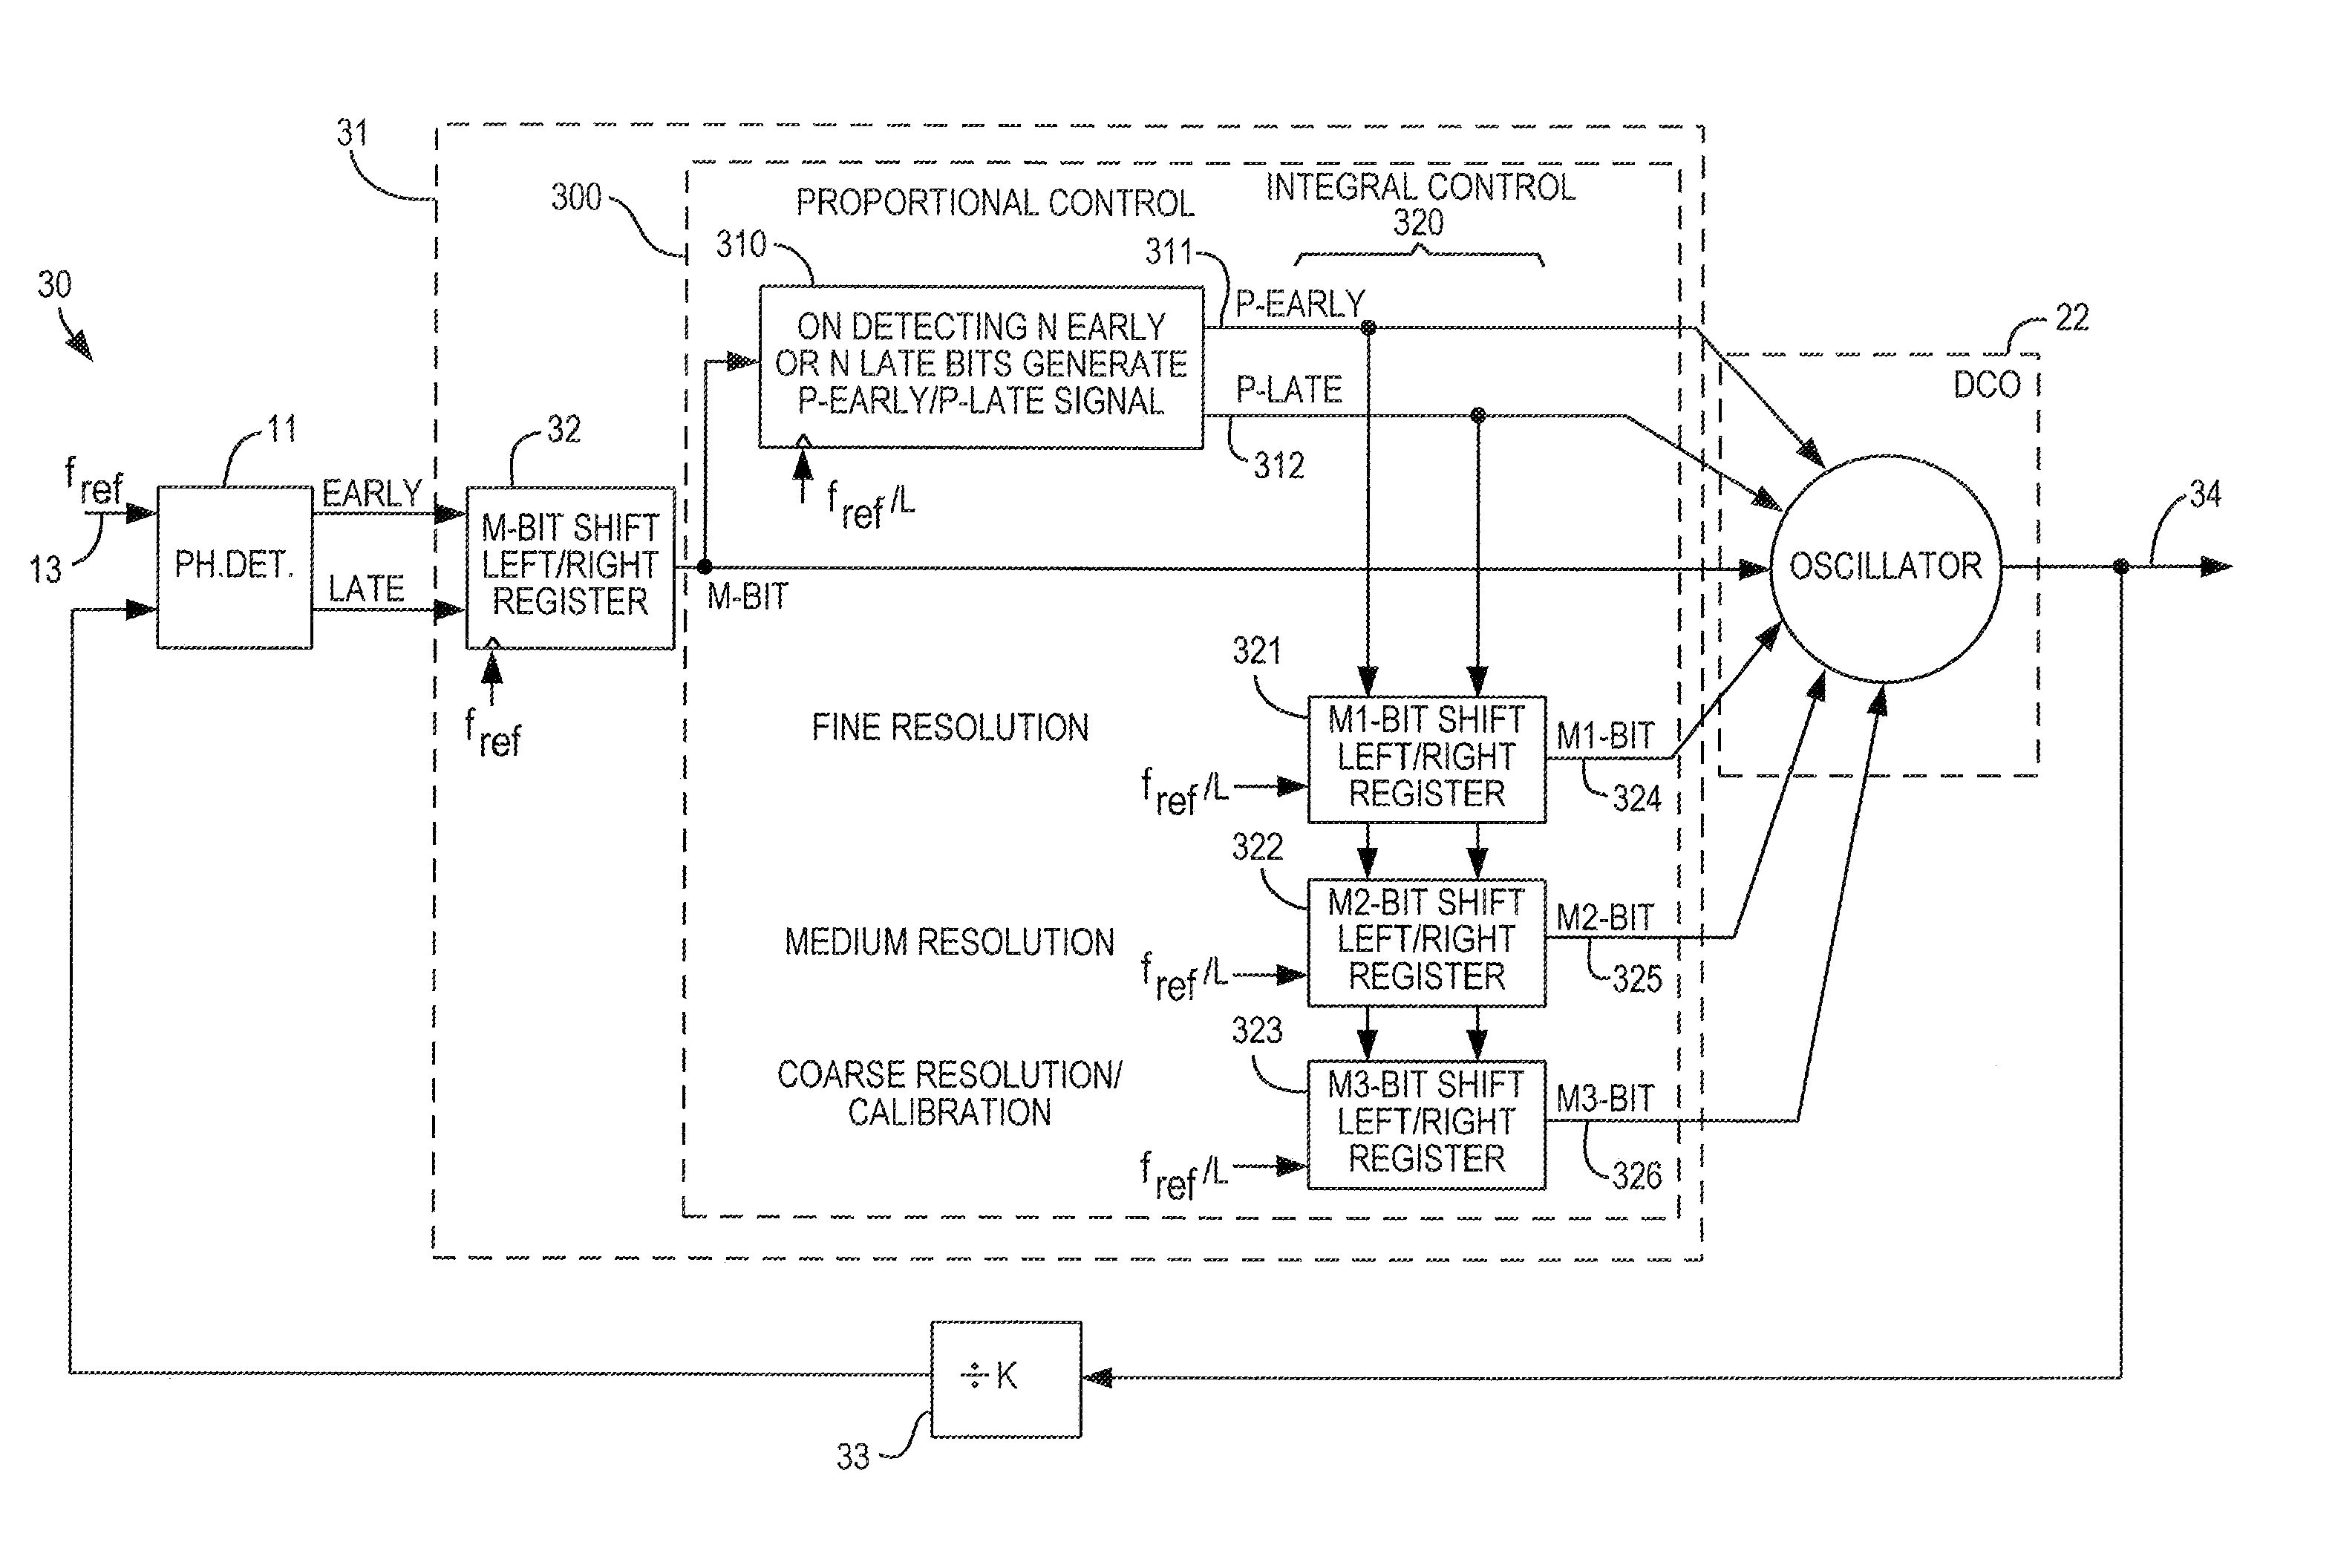 Digital loop circuit for programmable logic device